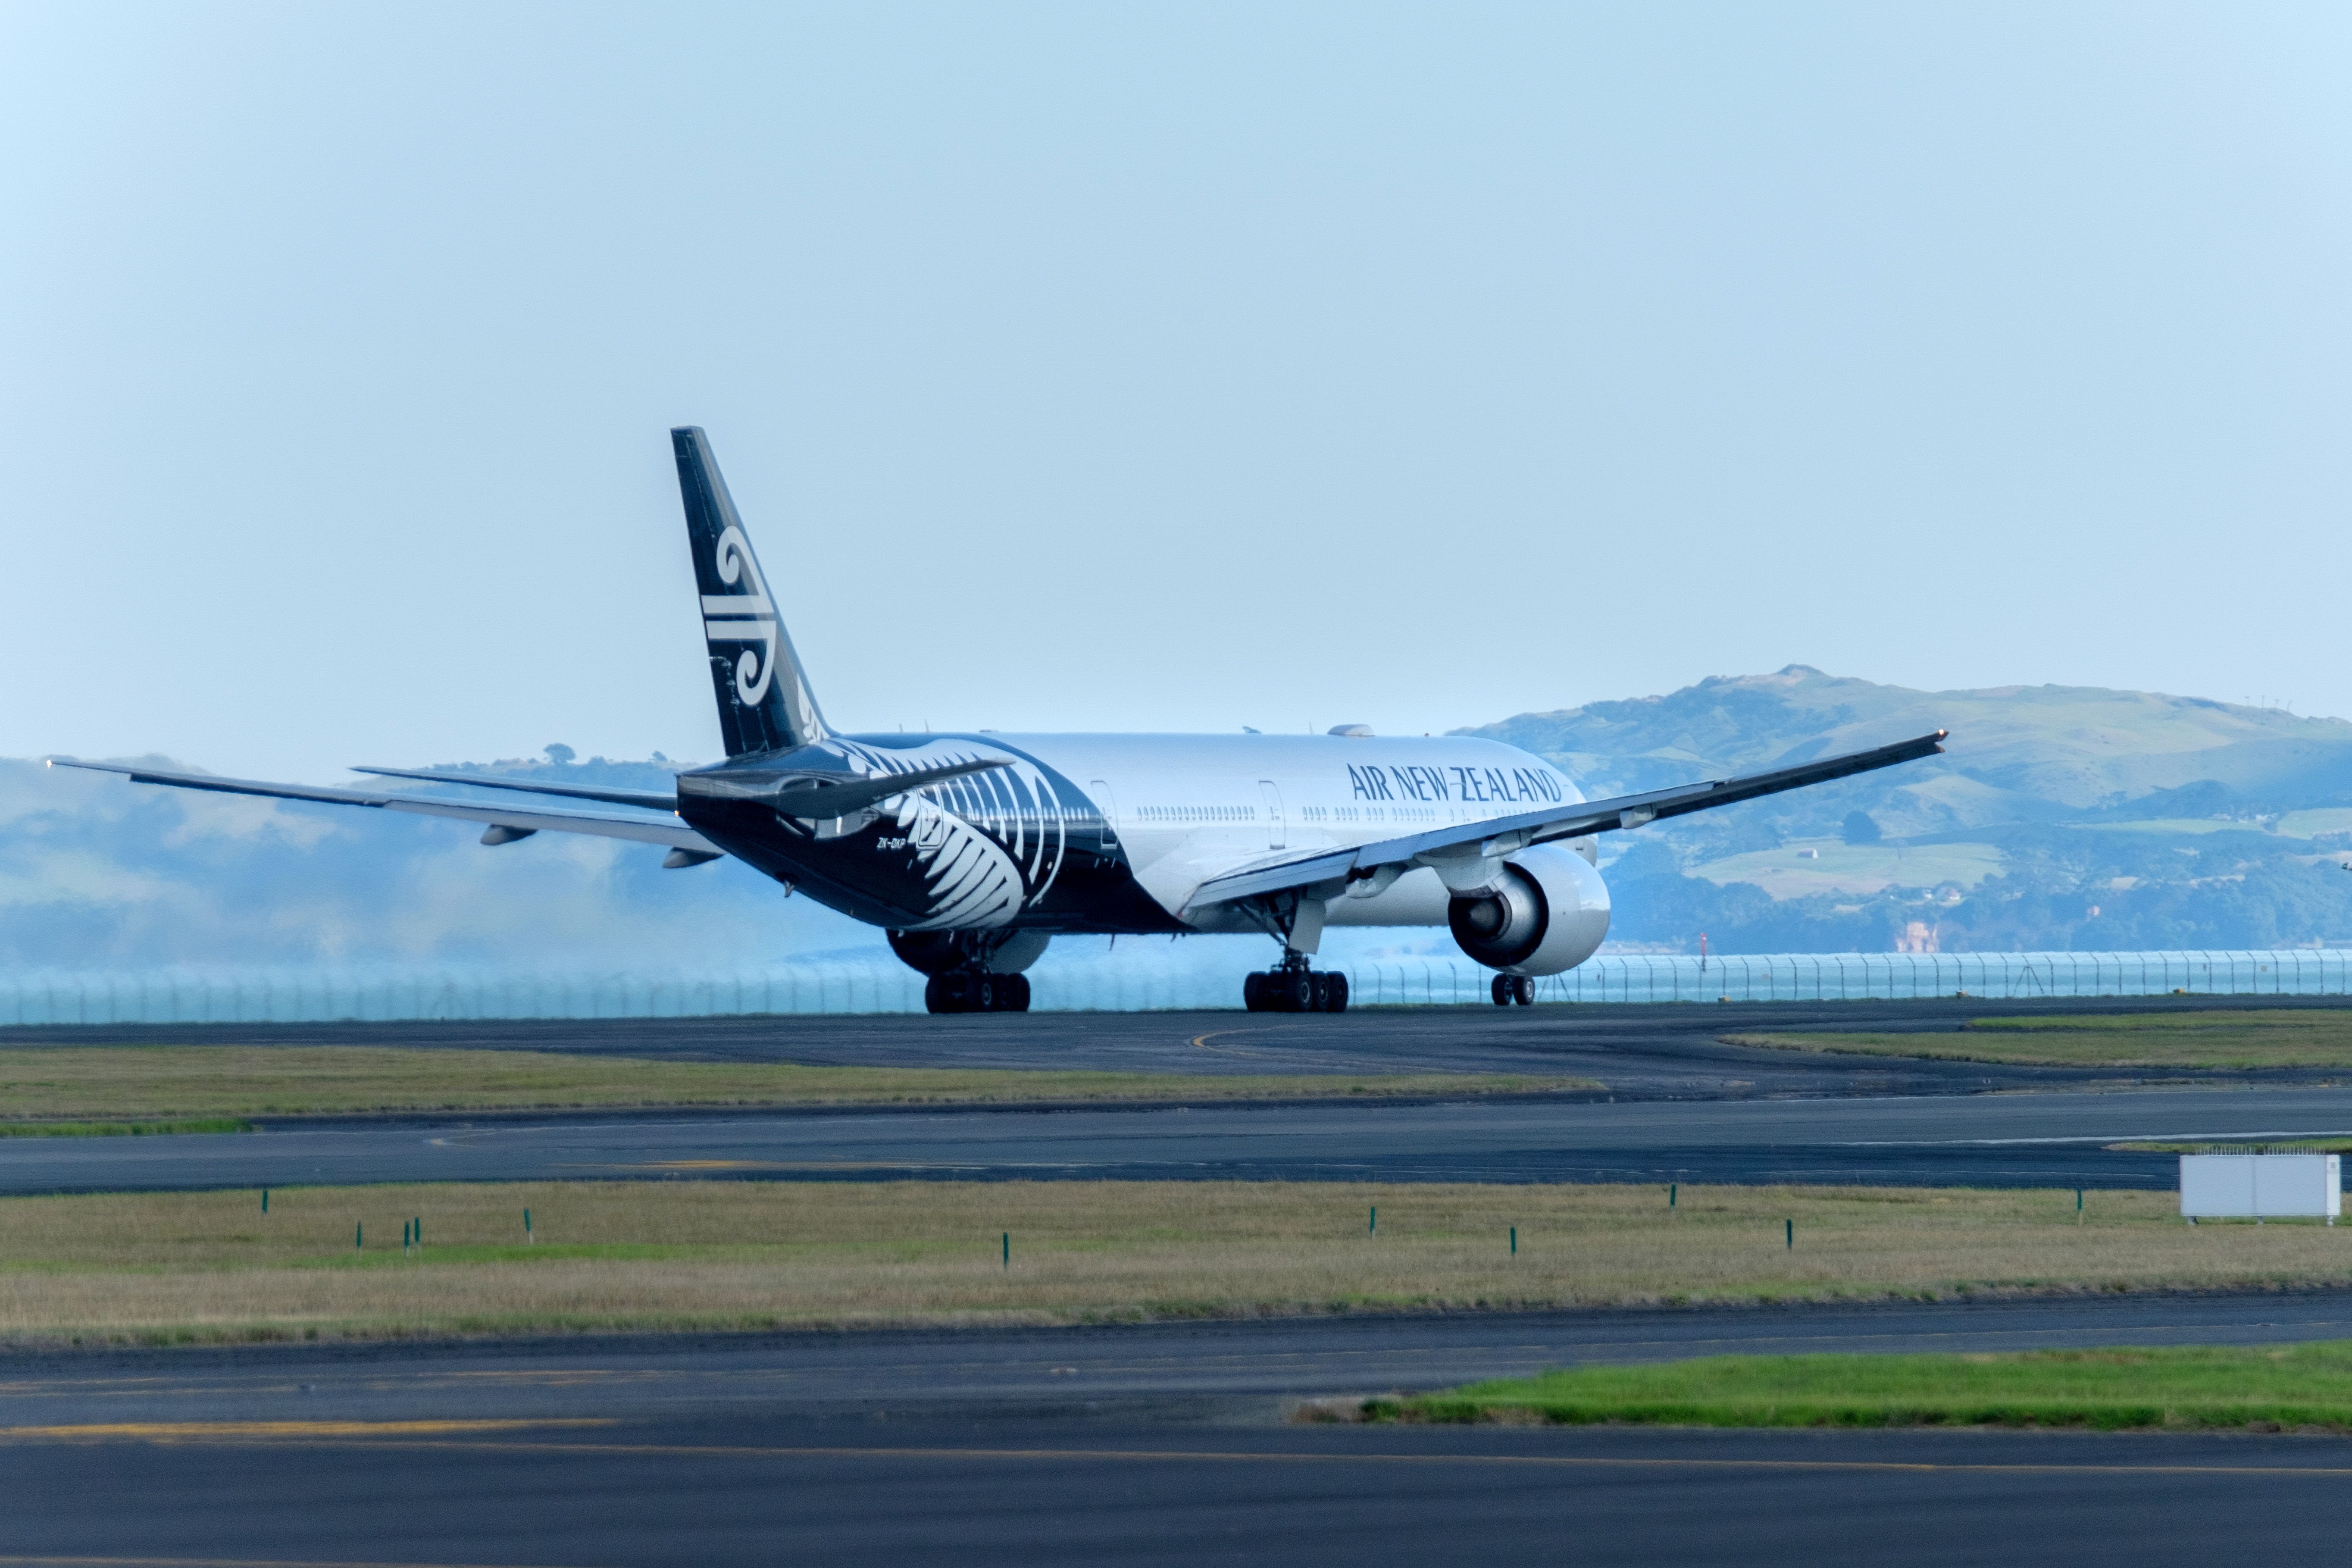 Air NZ calls Auckland airport home